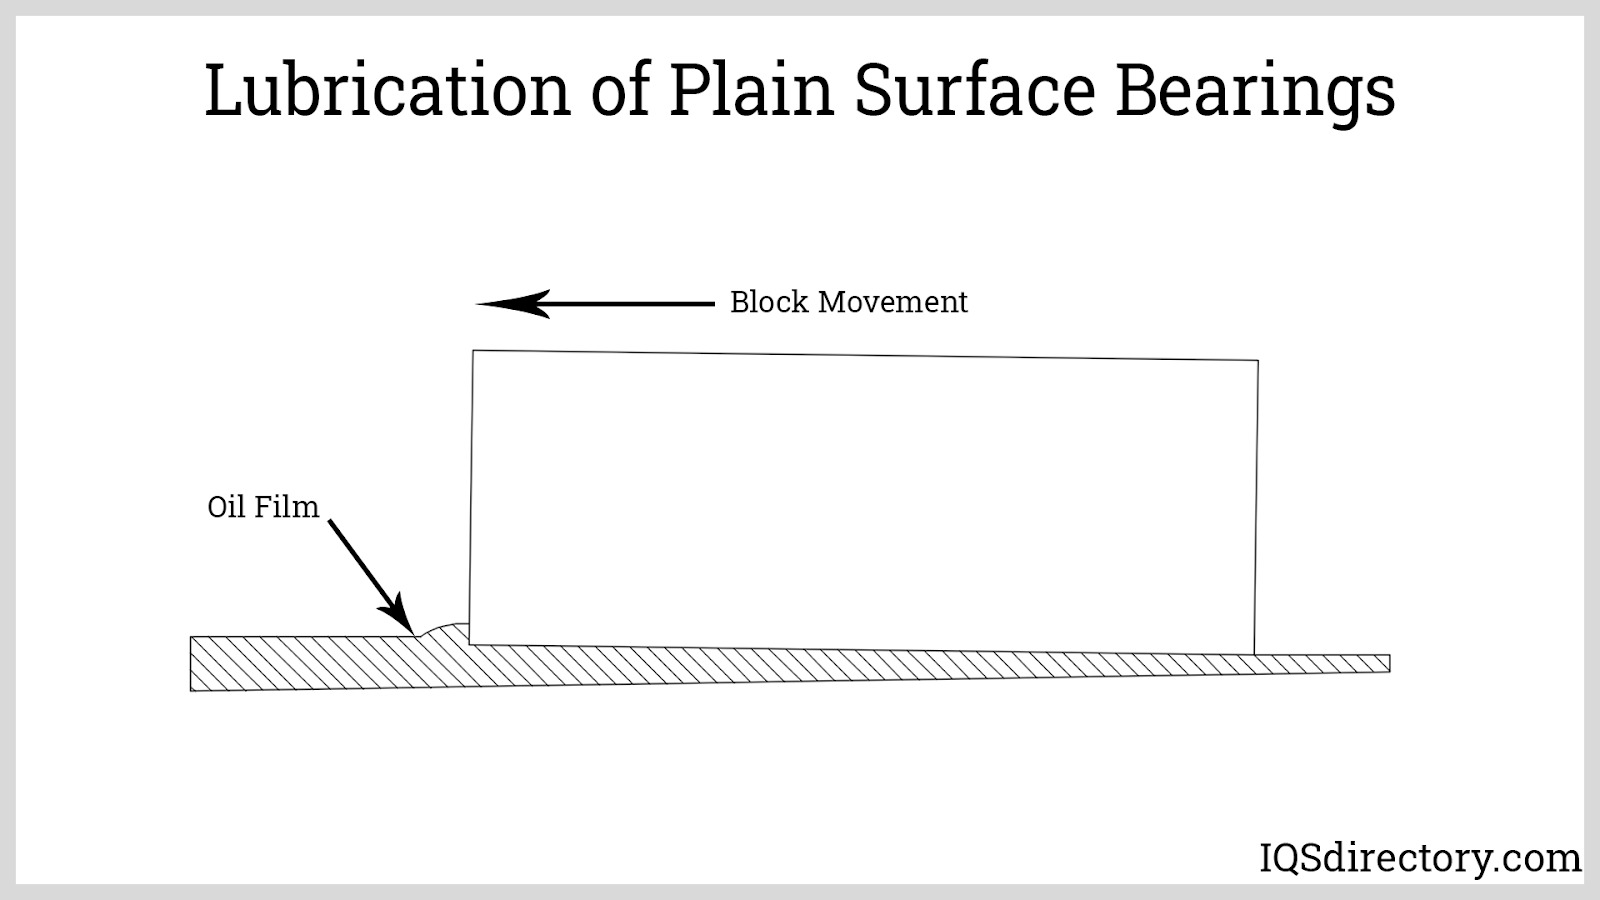 Lubrication of Plain Surface Bearings